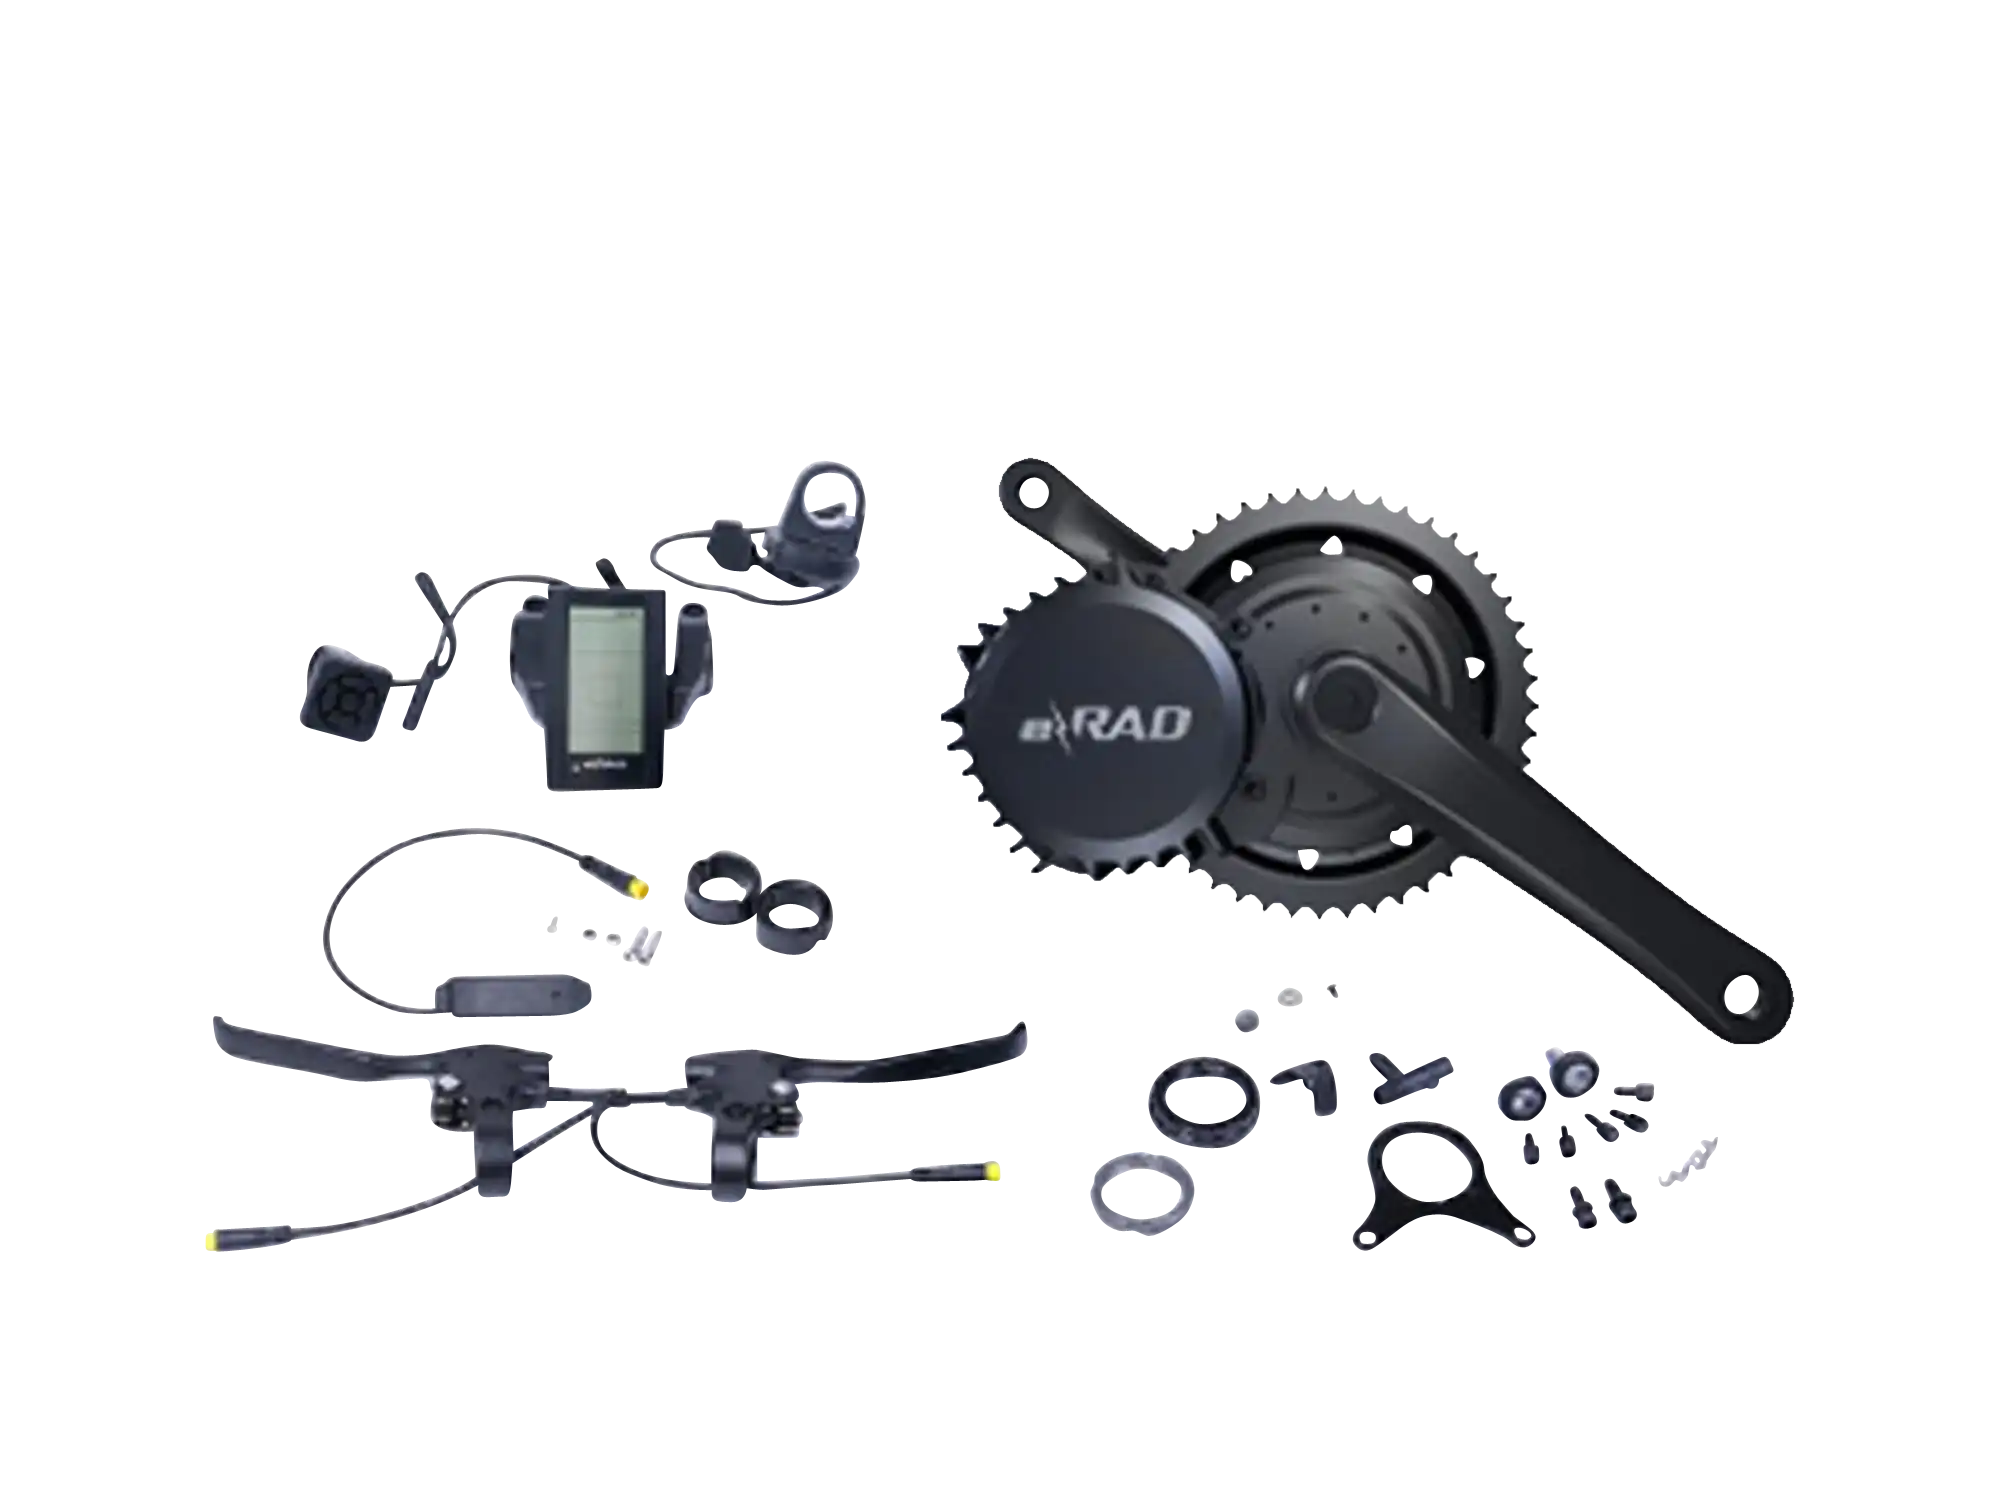 2015 e-RAD 1000 Watt Mid Drive Conversion Kit Review